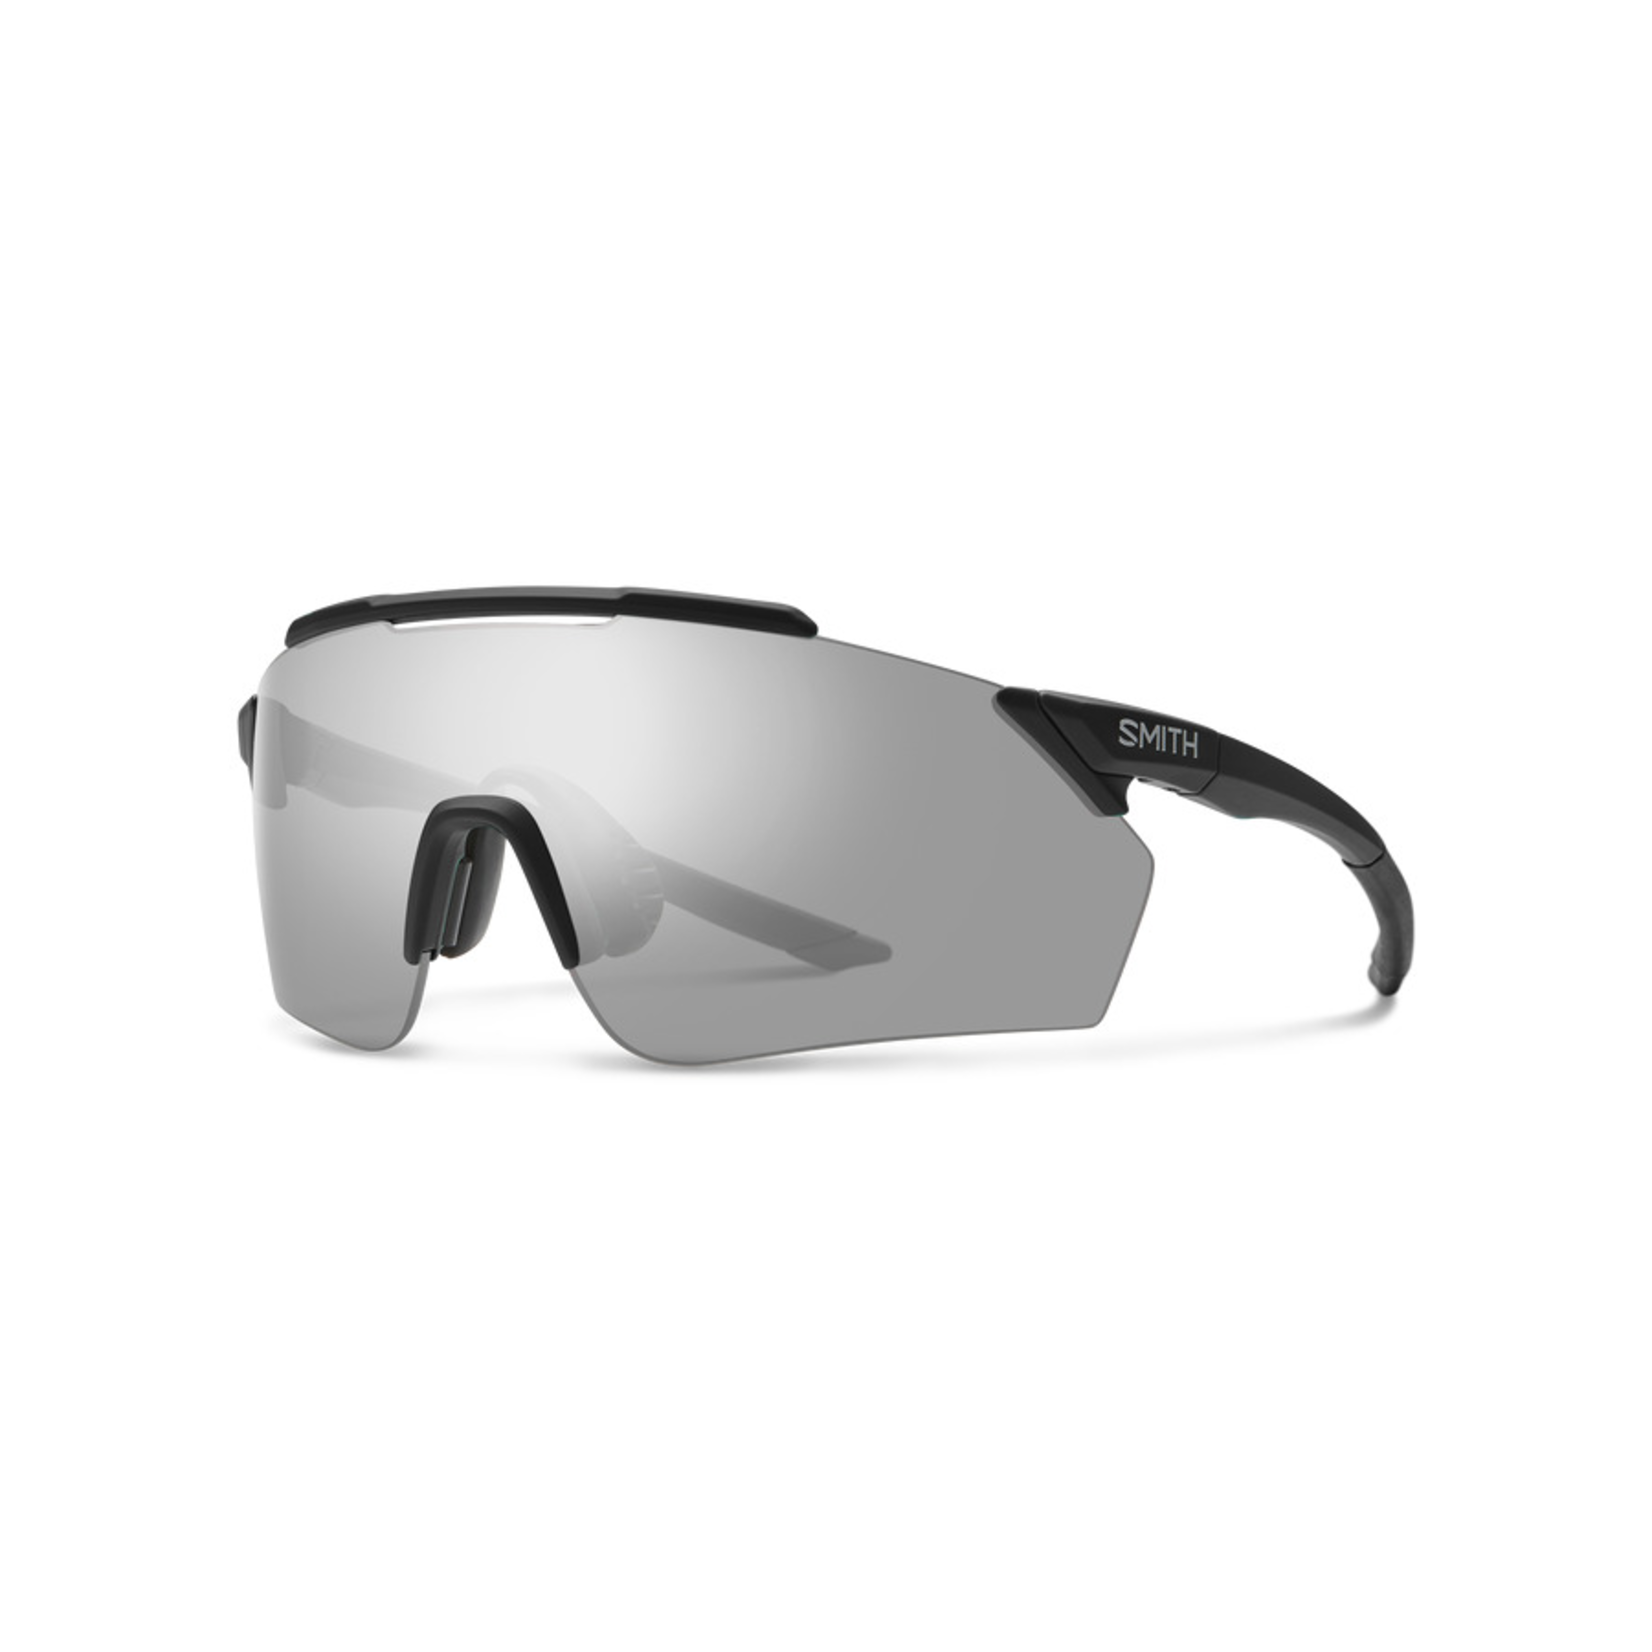 Smith Optics Smith Ruckus Sunglasses Matte Black + ChromaPop Platinum Mirror Lens